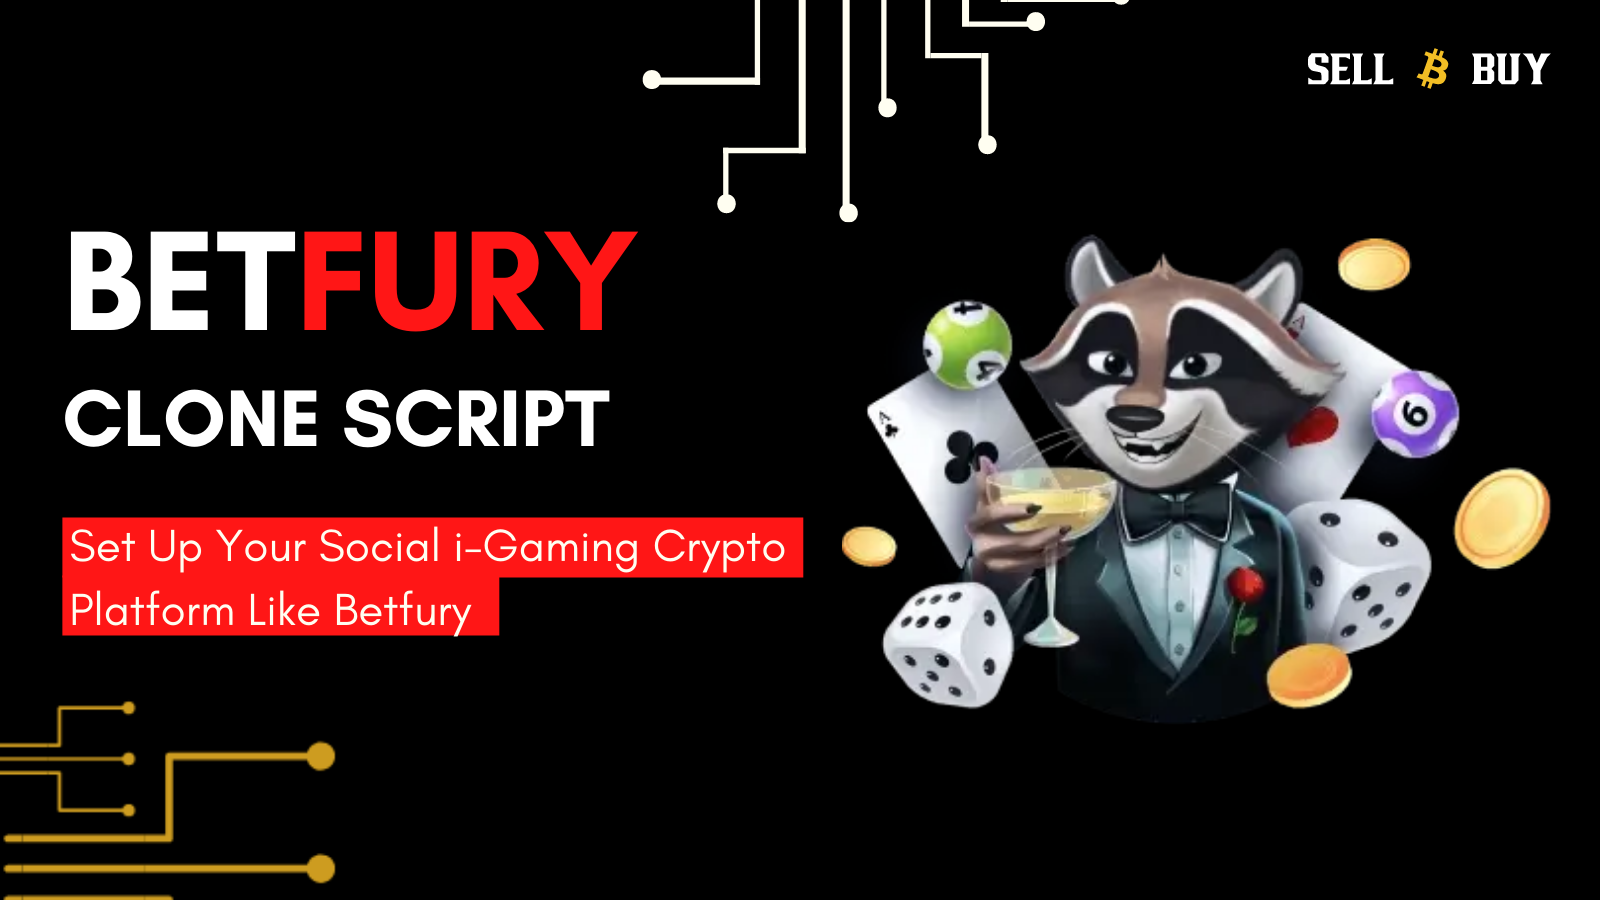 Betfury Clone Script: First Game Platform In Social i-Gaming